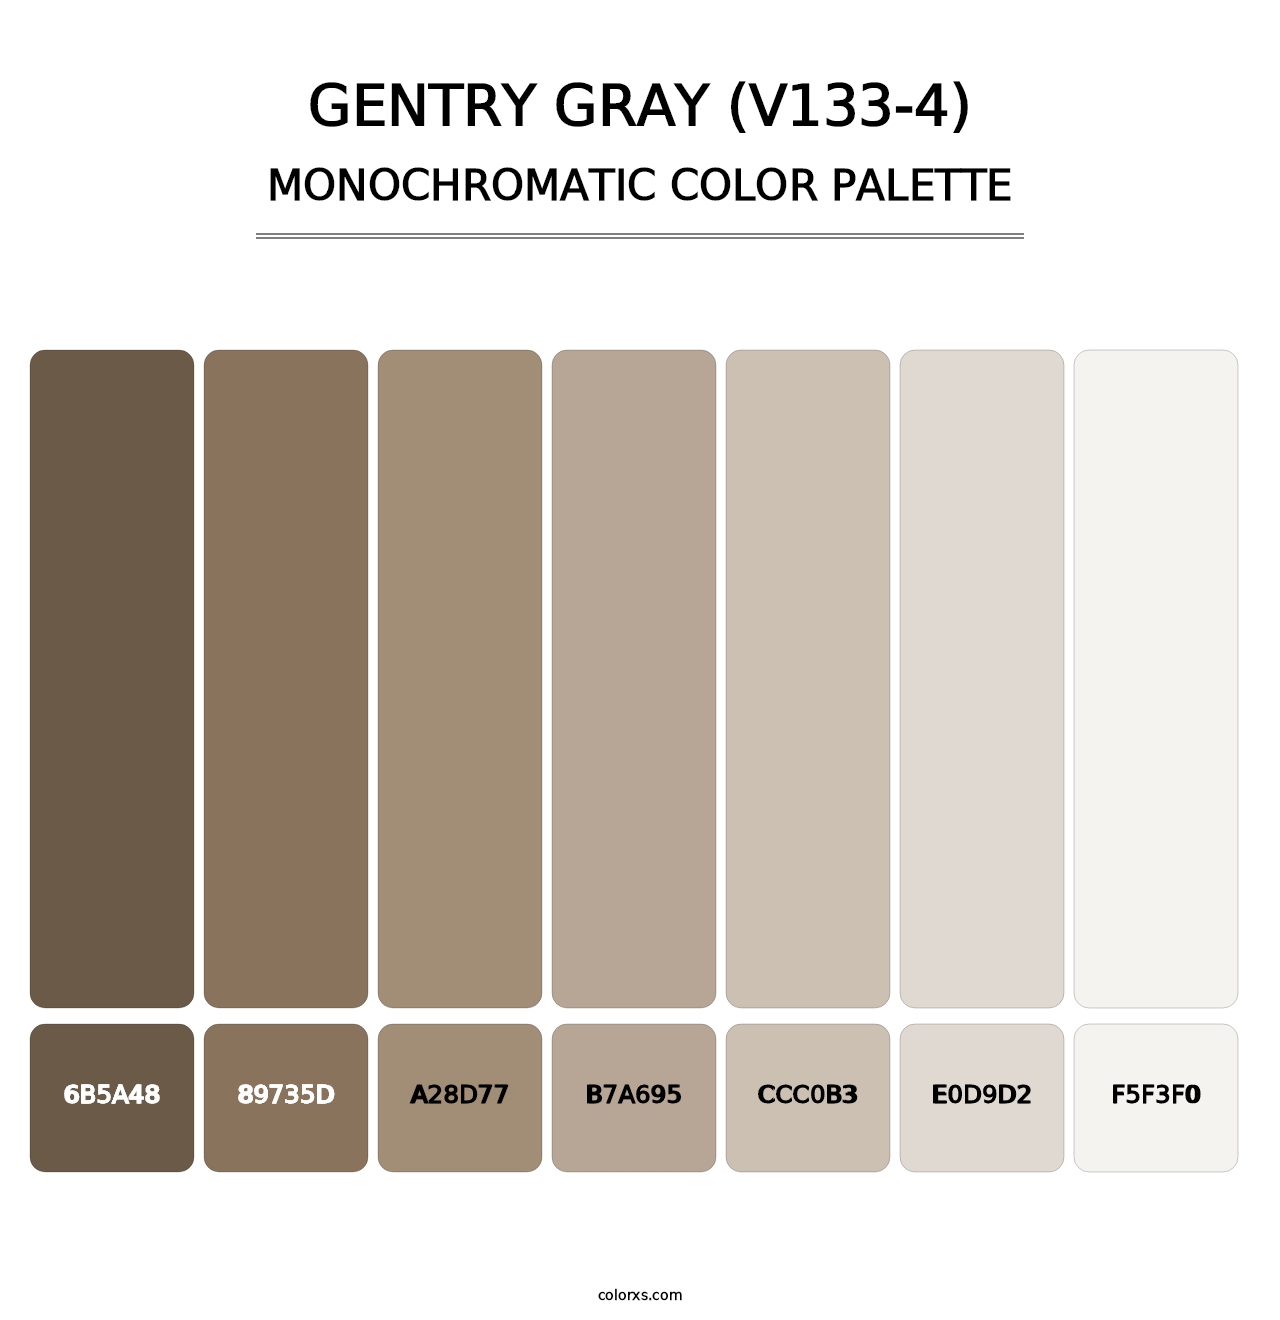 Gentry Gray (V133-4) - Monochromatic Color Palette